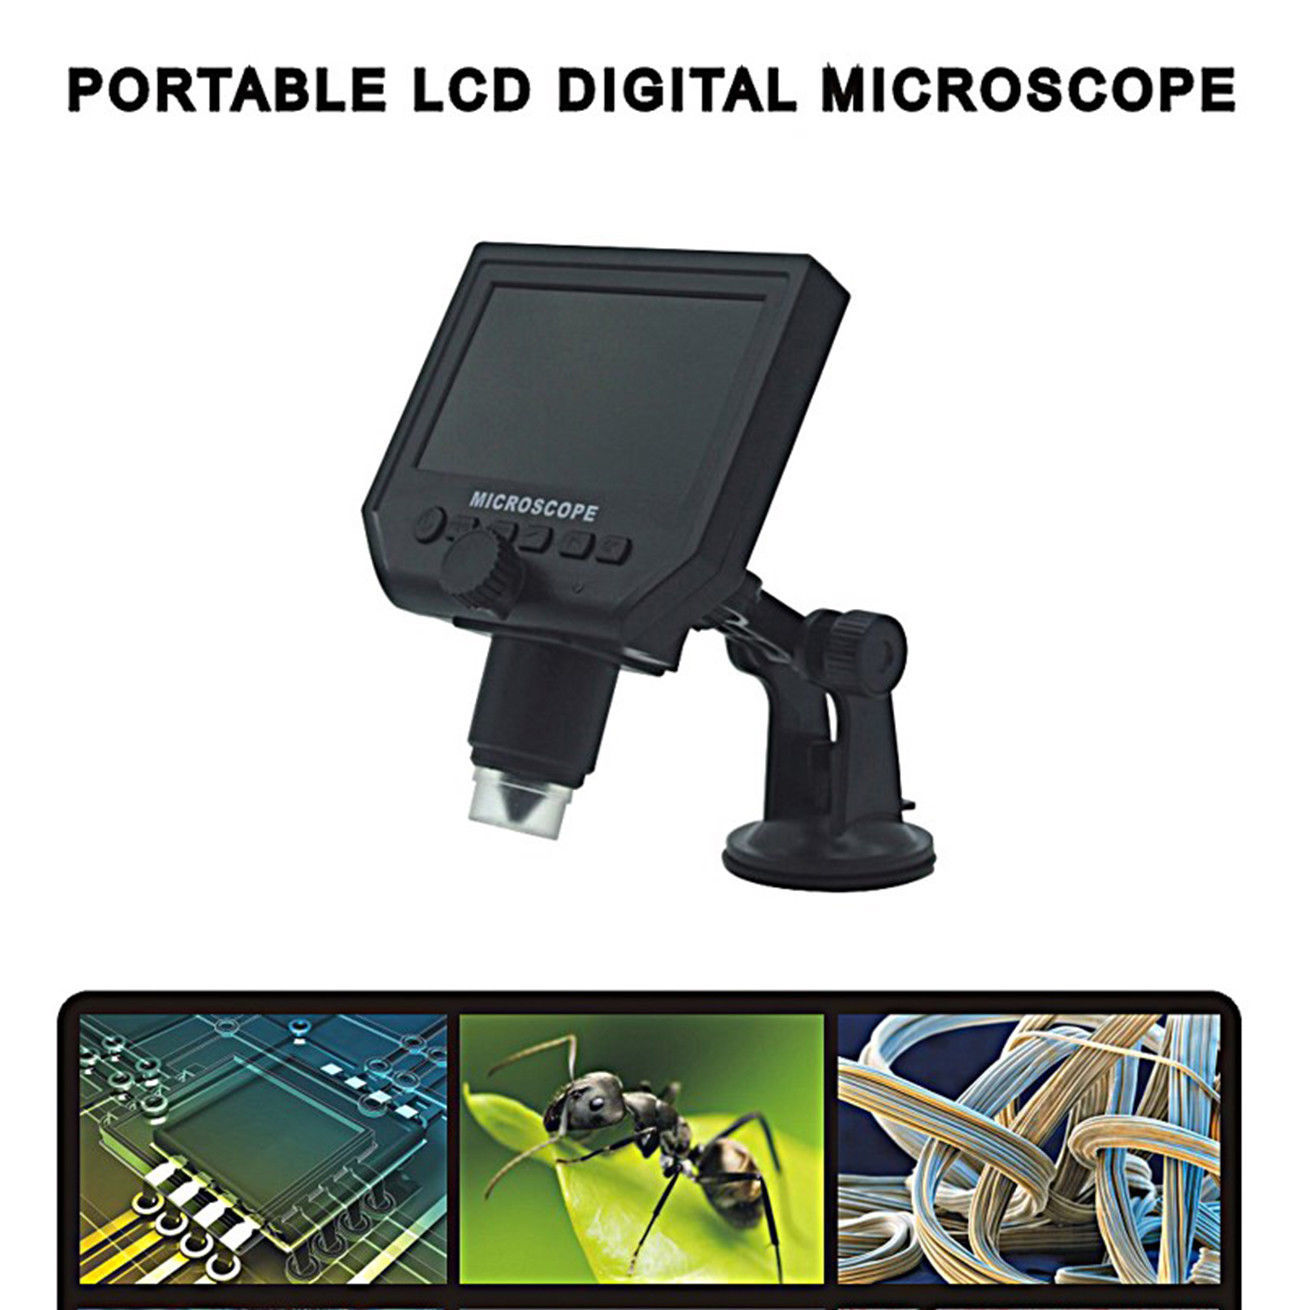 Innovation beyond imagination usb digital microscope 1000x